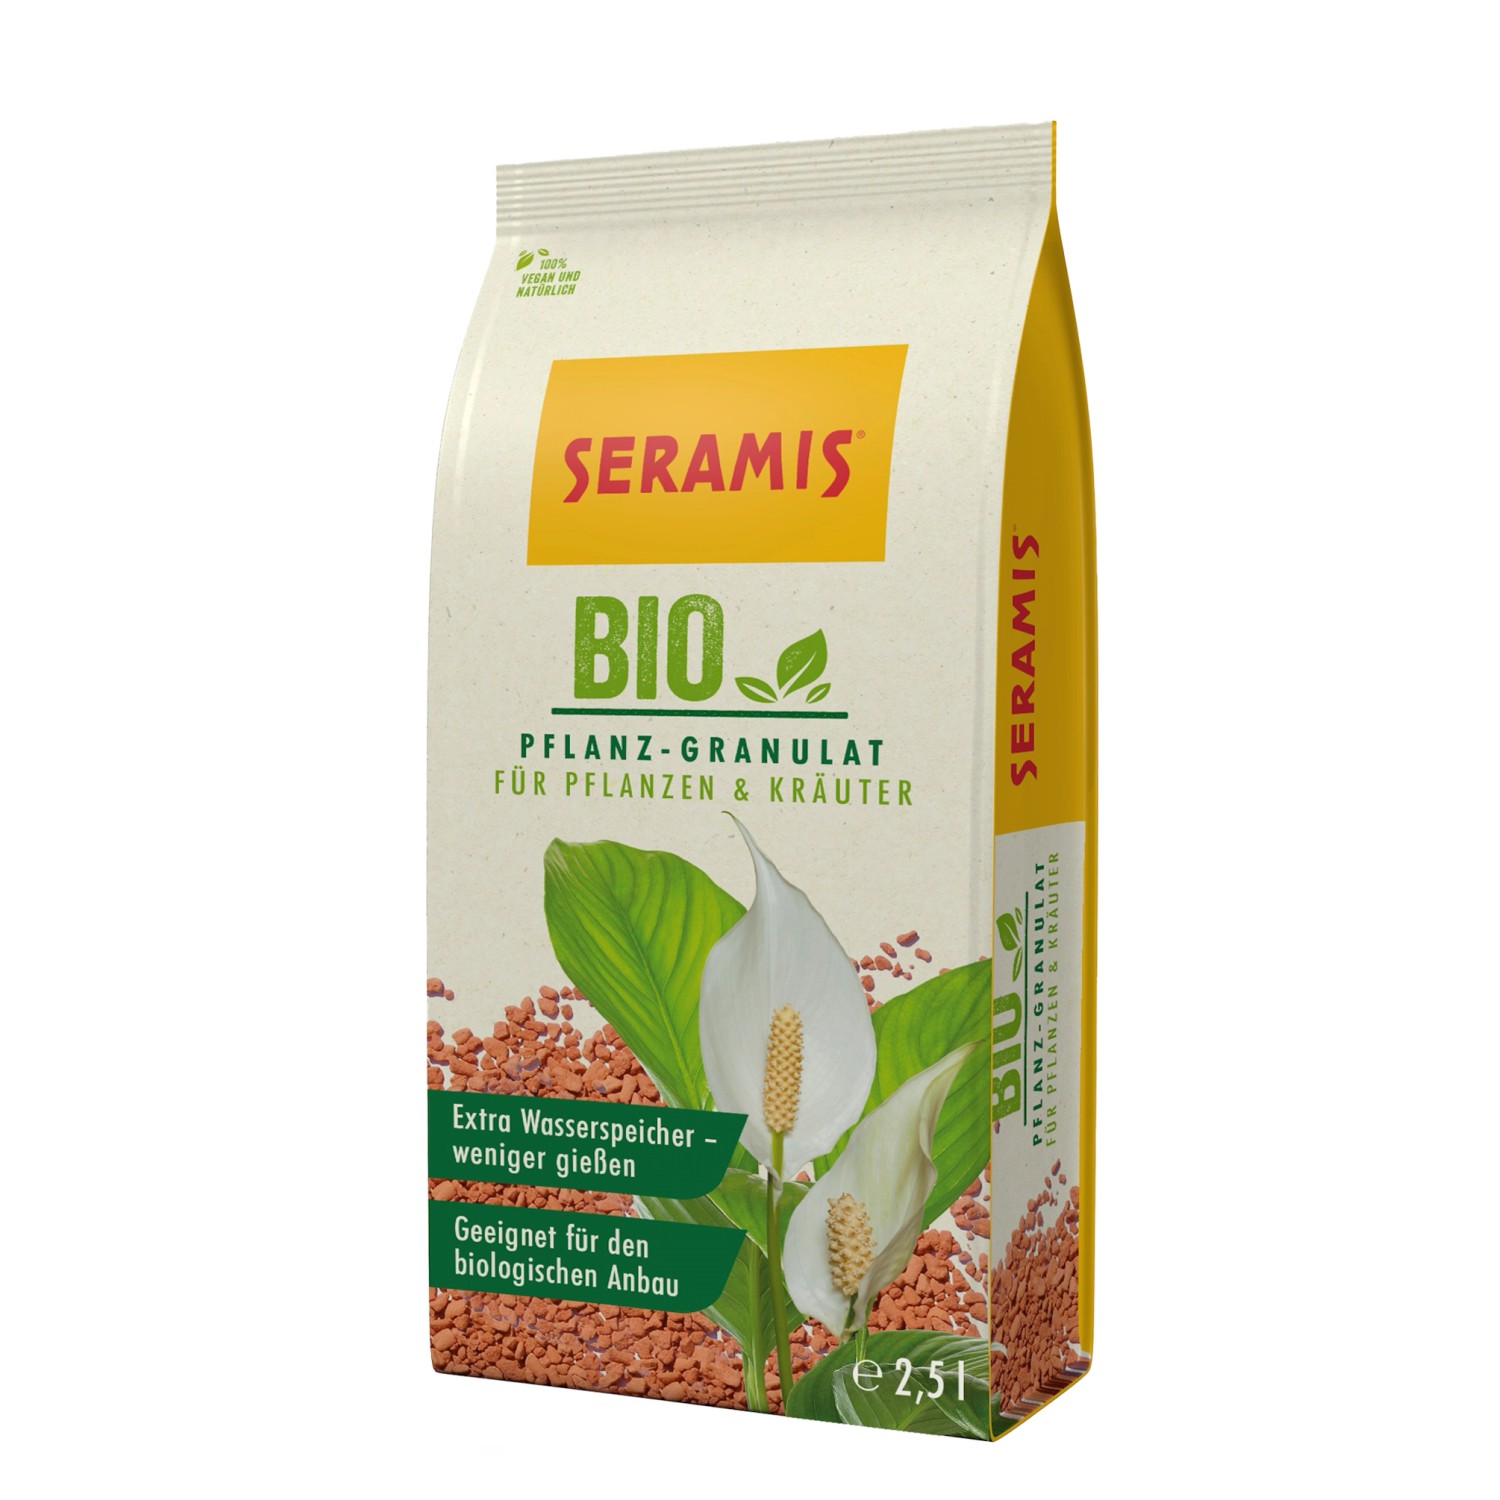 Seramis Bio-Pflanz-Granulat für Pflanzen & Kräuter 2,5 l